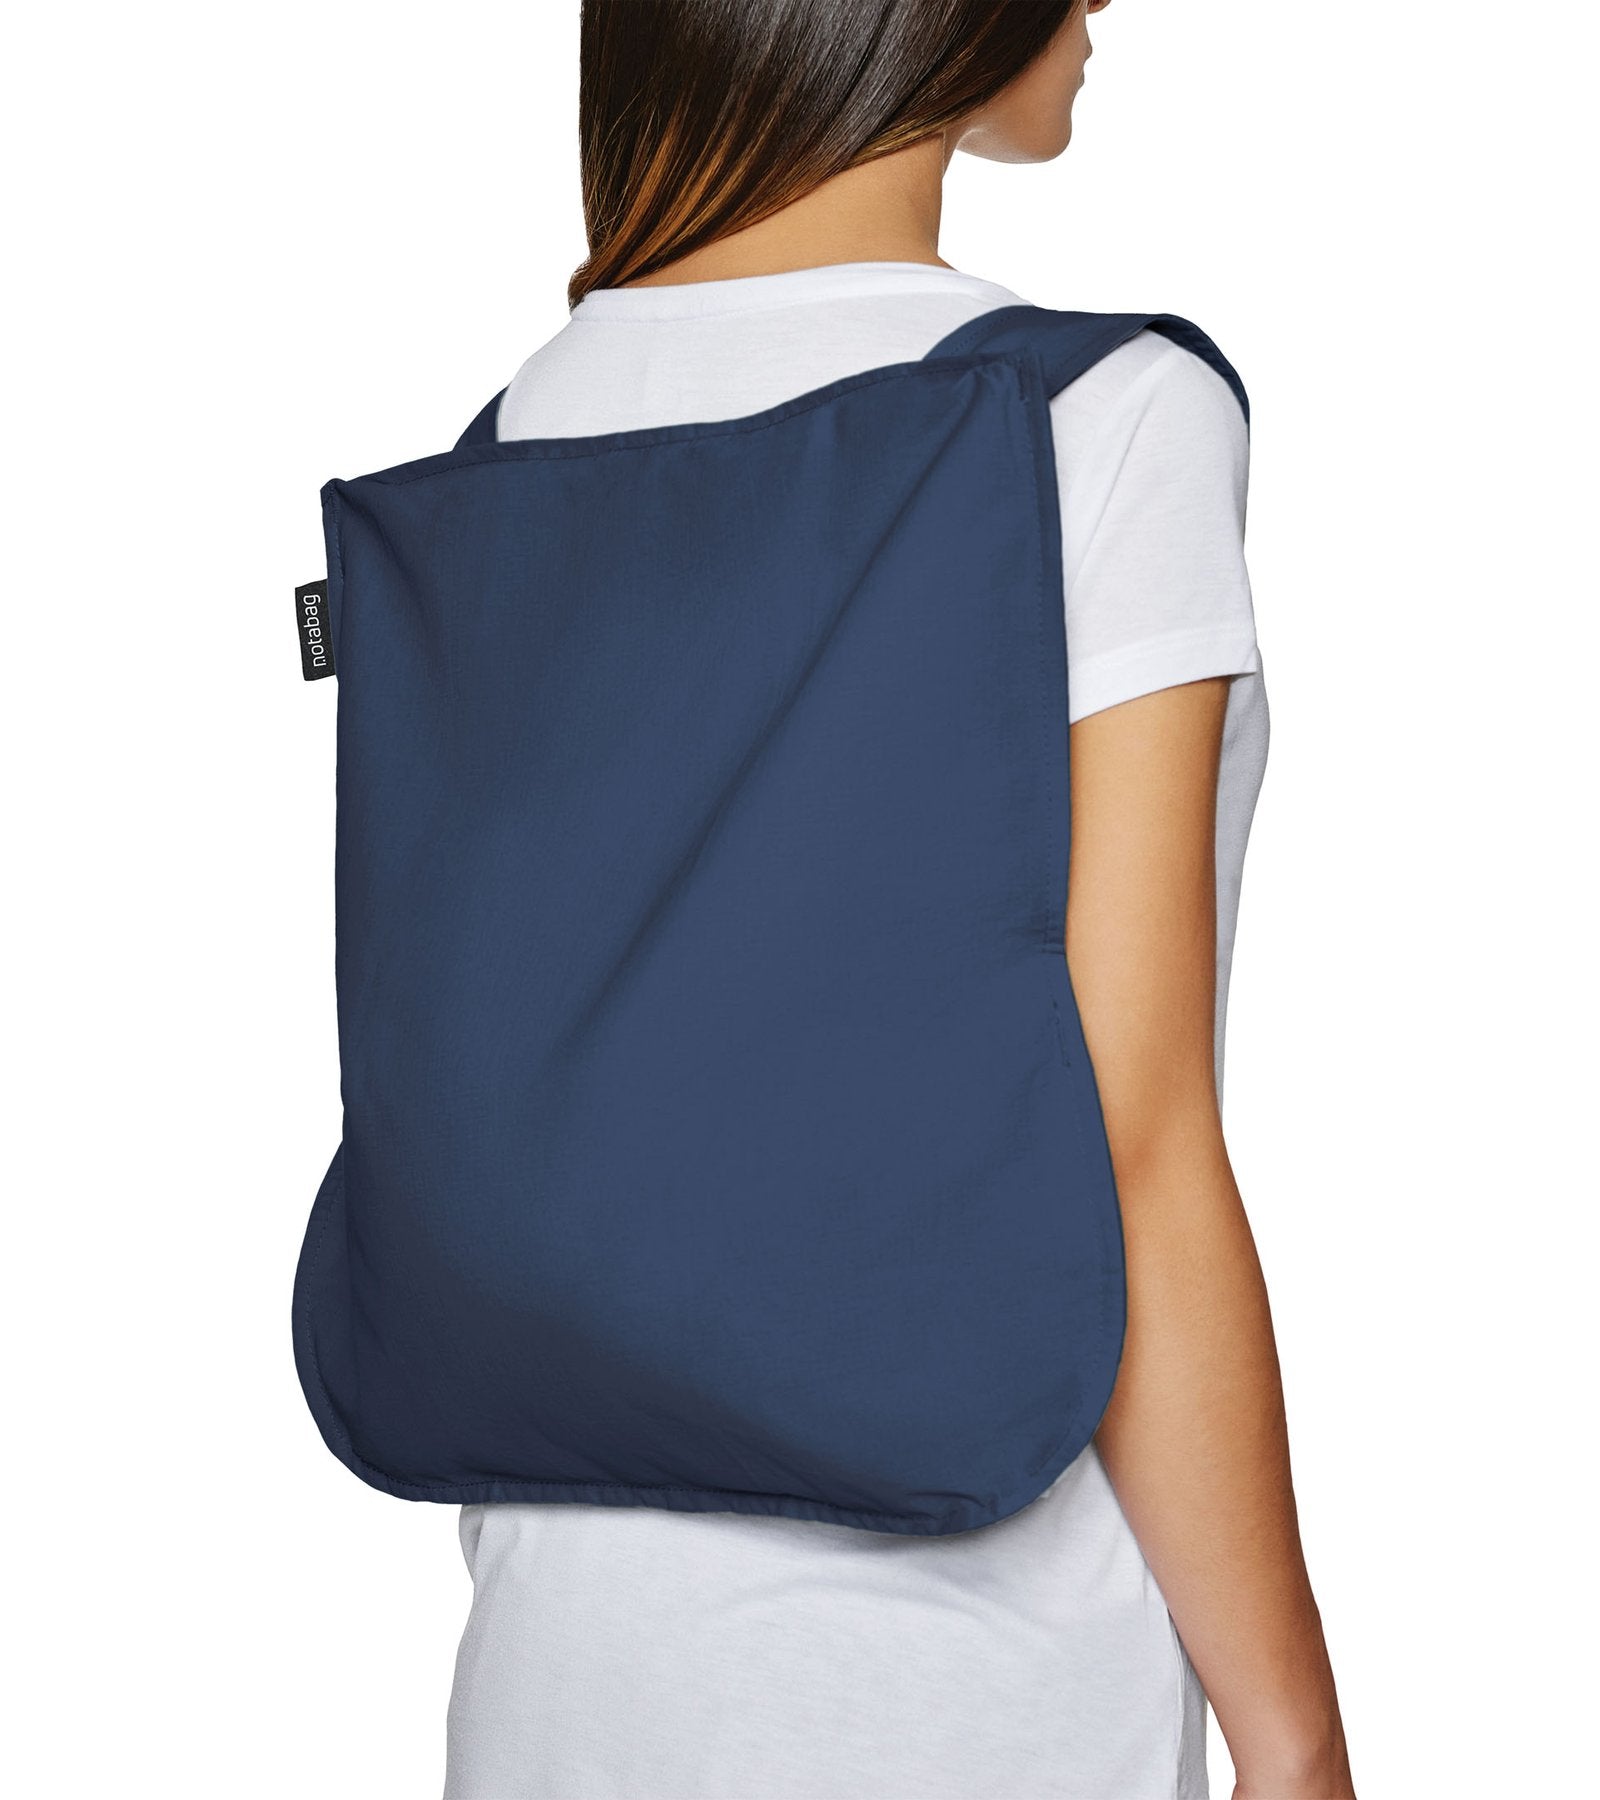 Notabag Convertible Tote Backpack – Navy Blue